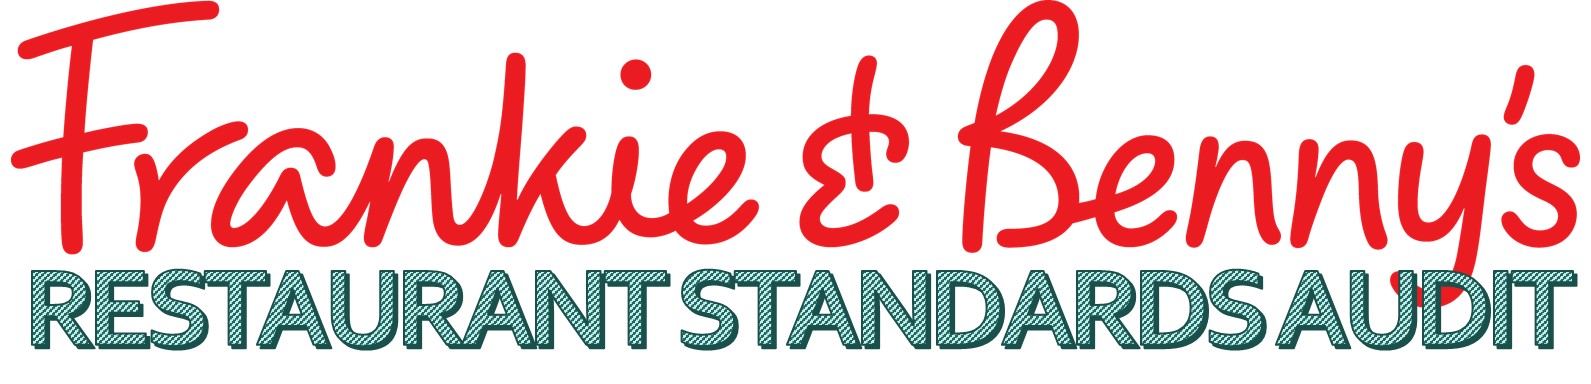 Restaurant Standards Audit - F&B 2018